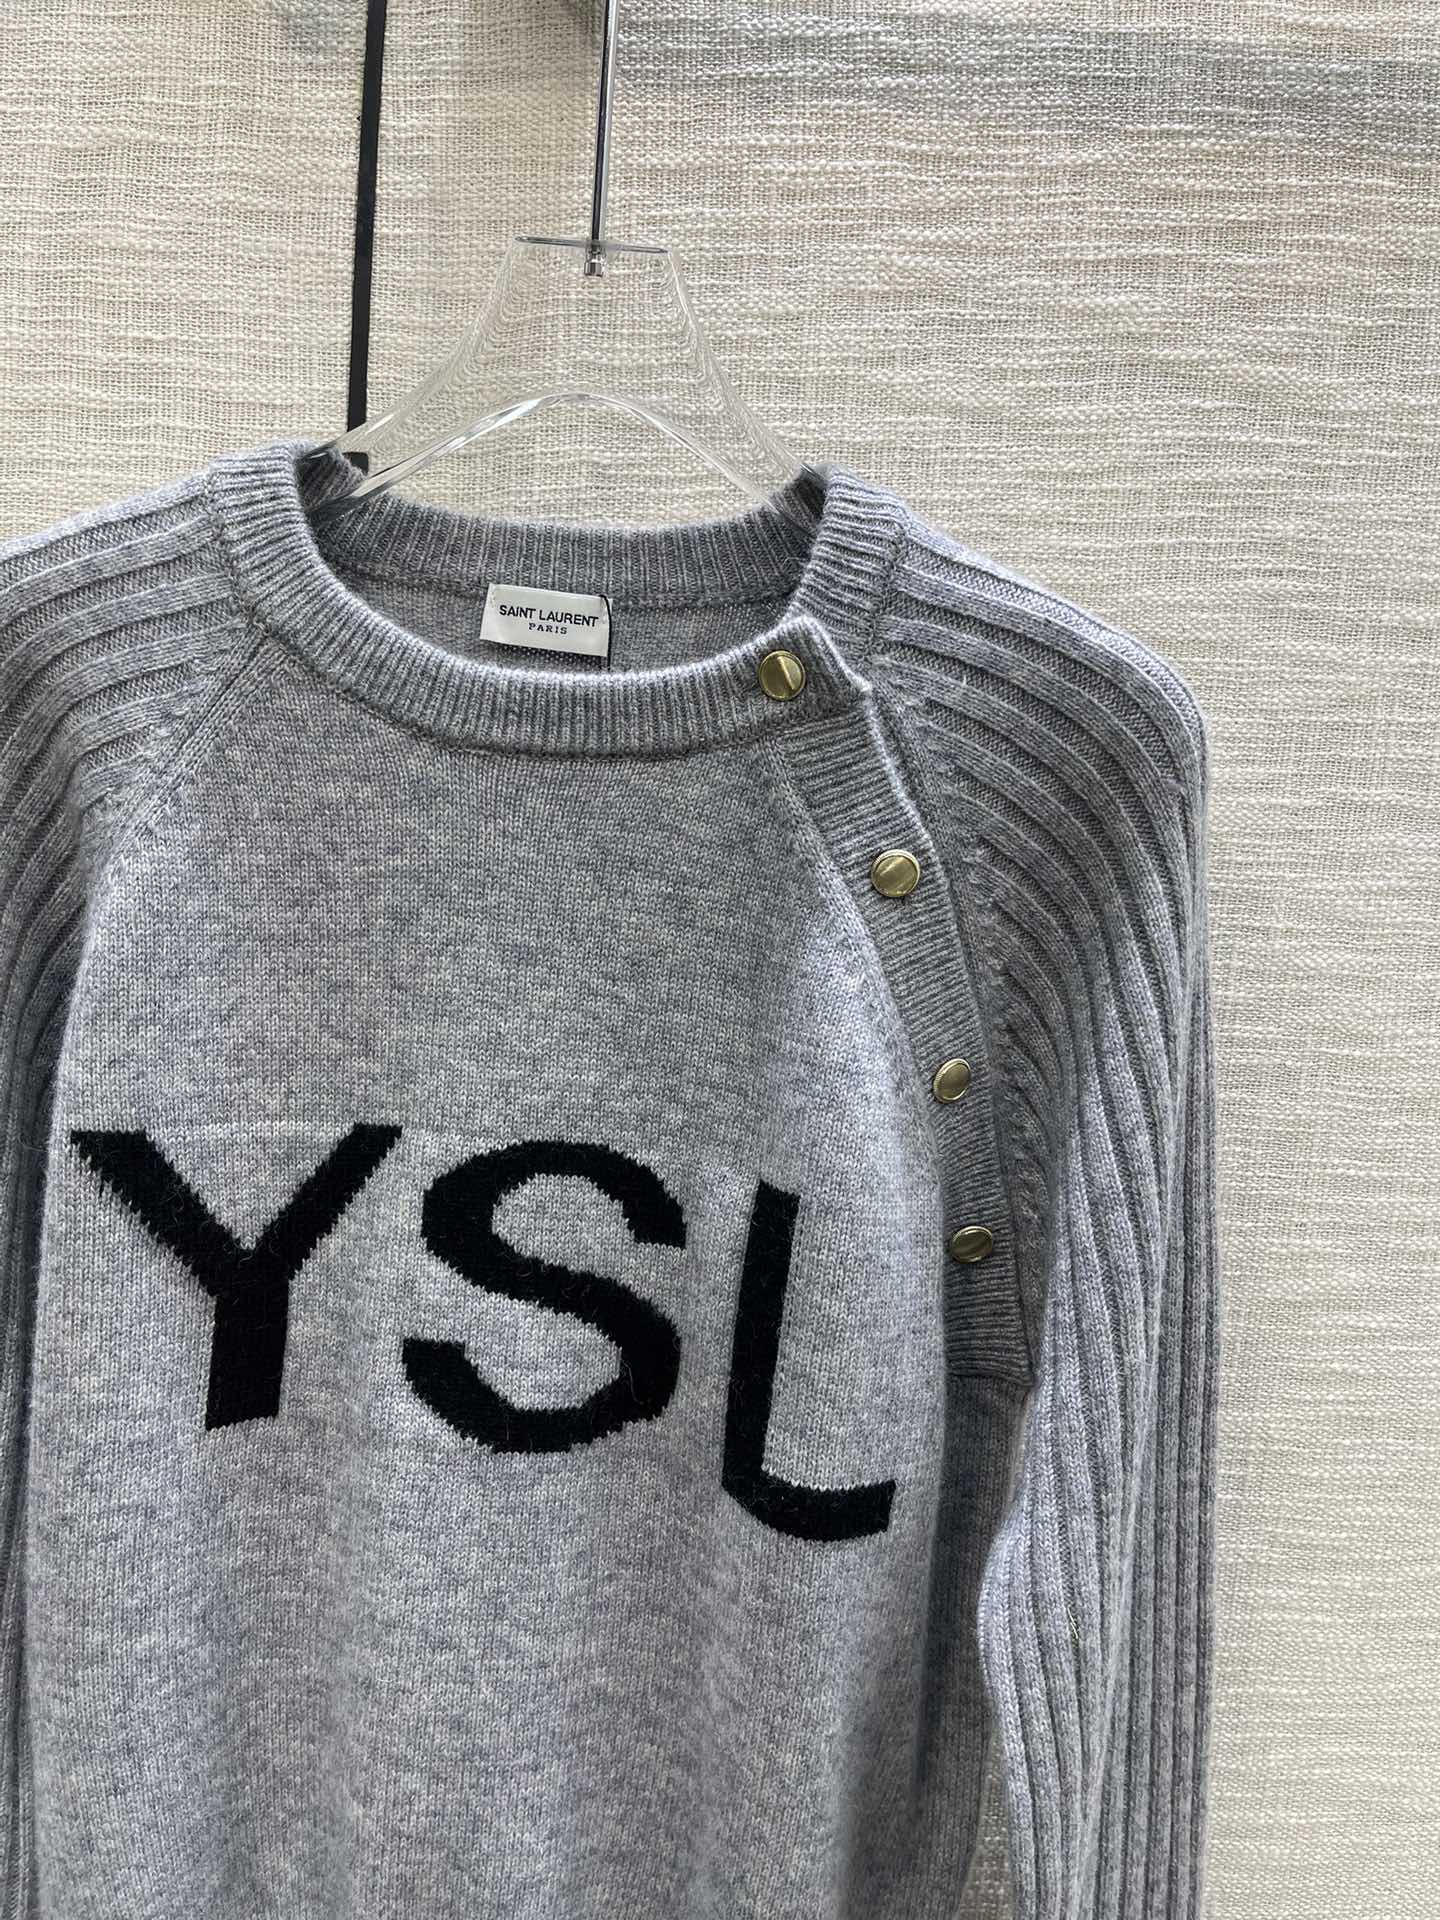 YSL サンローラントップスコピー セーター 秋冬トップス 温かい シンプル コットン 3色 グレイ_4